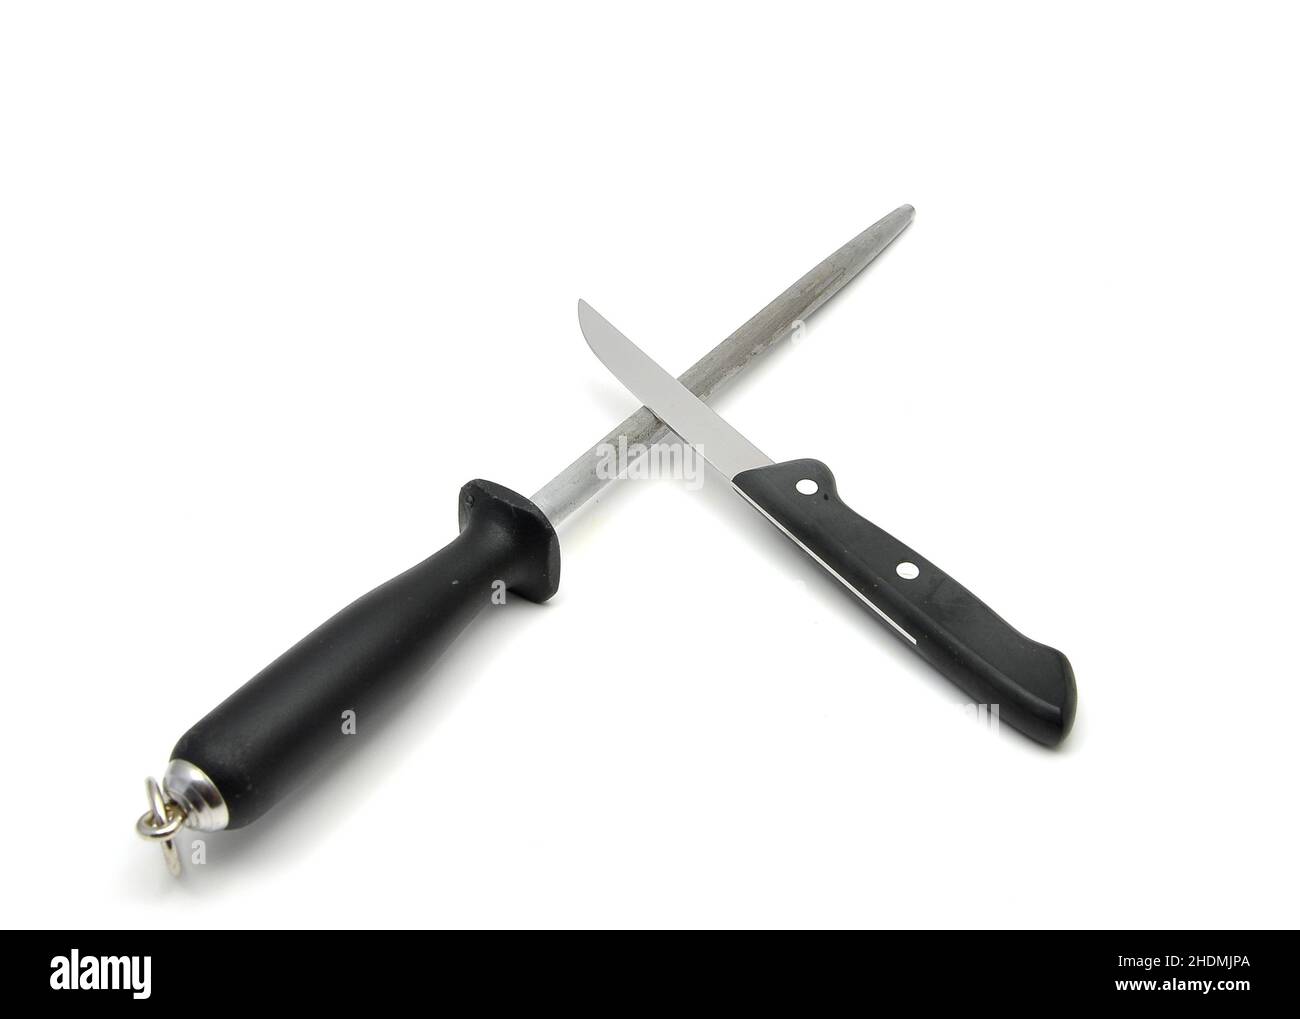 https://c8.alamy.com/comp/2HDMJPA/table-knife-sharpening-wetzstahl-table-knifes-2HDMJPA.jpg